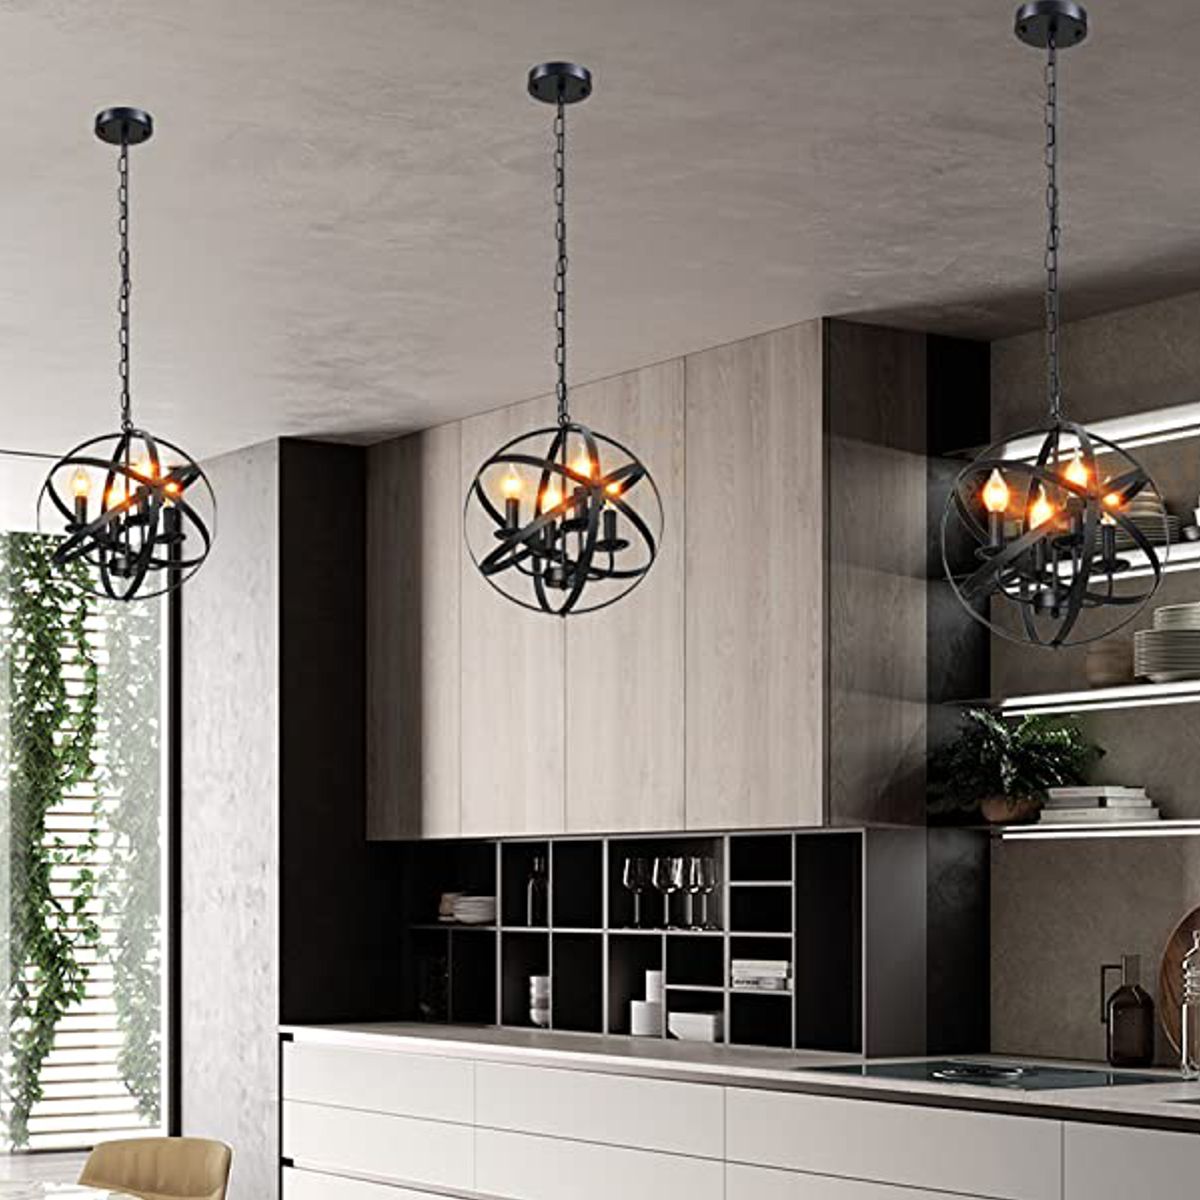 Antique-Style-Industrial-Vintage-Lighting-Ceiling-Chandelier-4-Lights-Decorative-Luminaire-Metal-Han-1754124